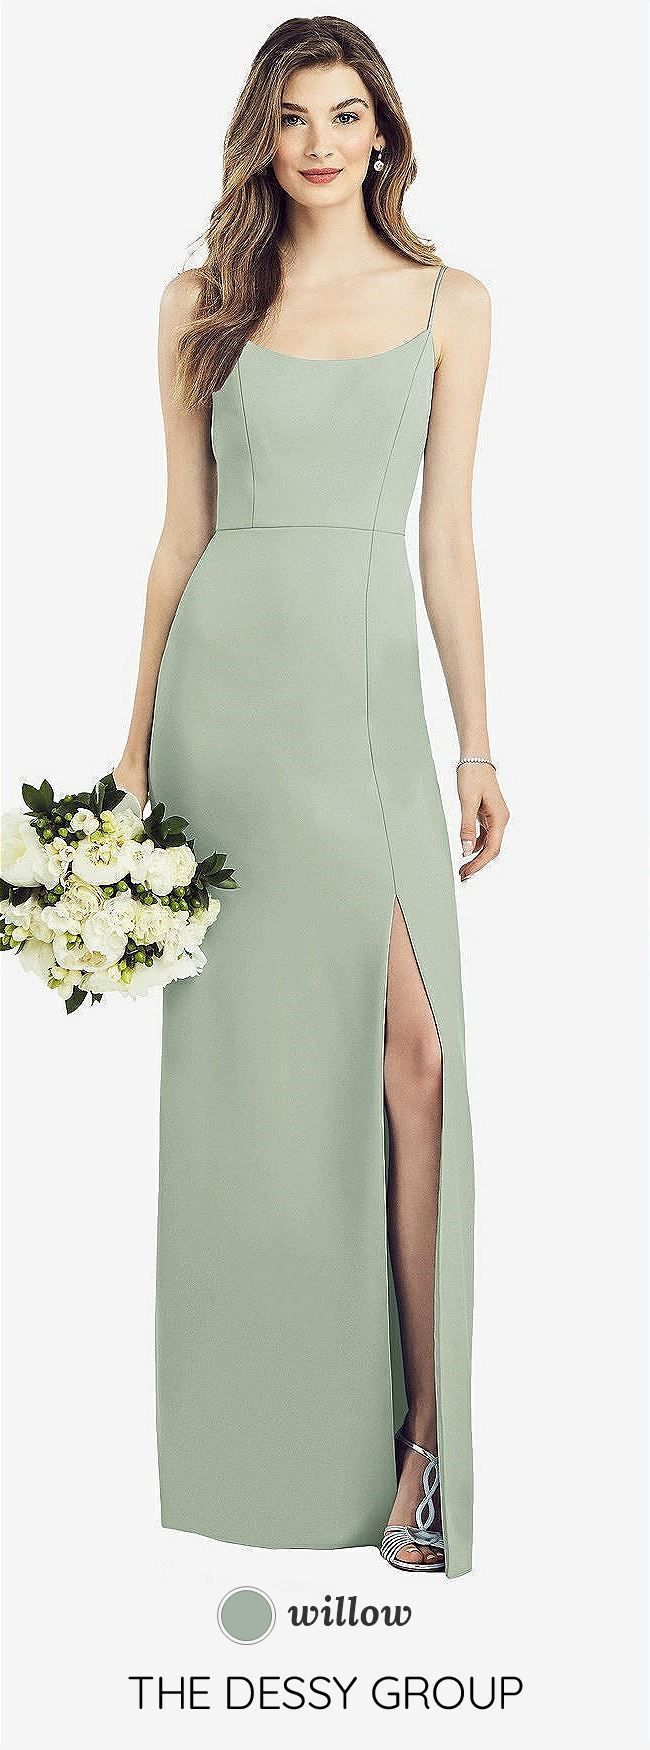 Dusty Sage Green Bridesmaid Dresses -   19 sage green bridesmaid dresses vintage ideas